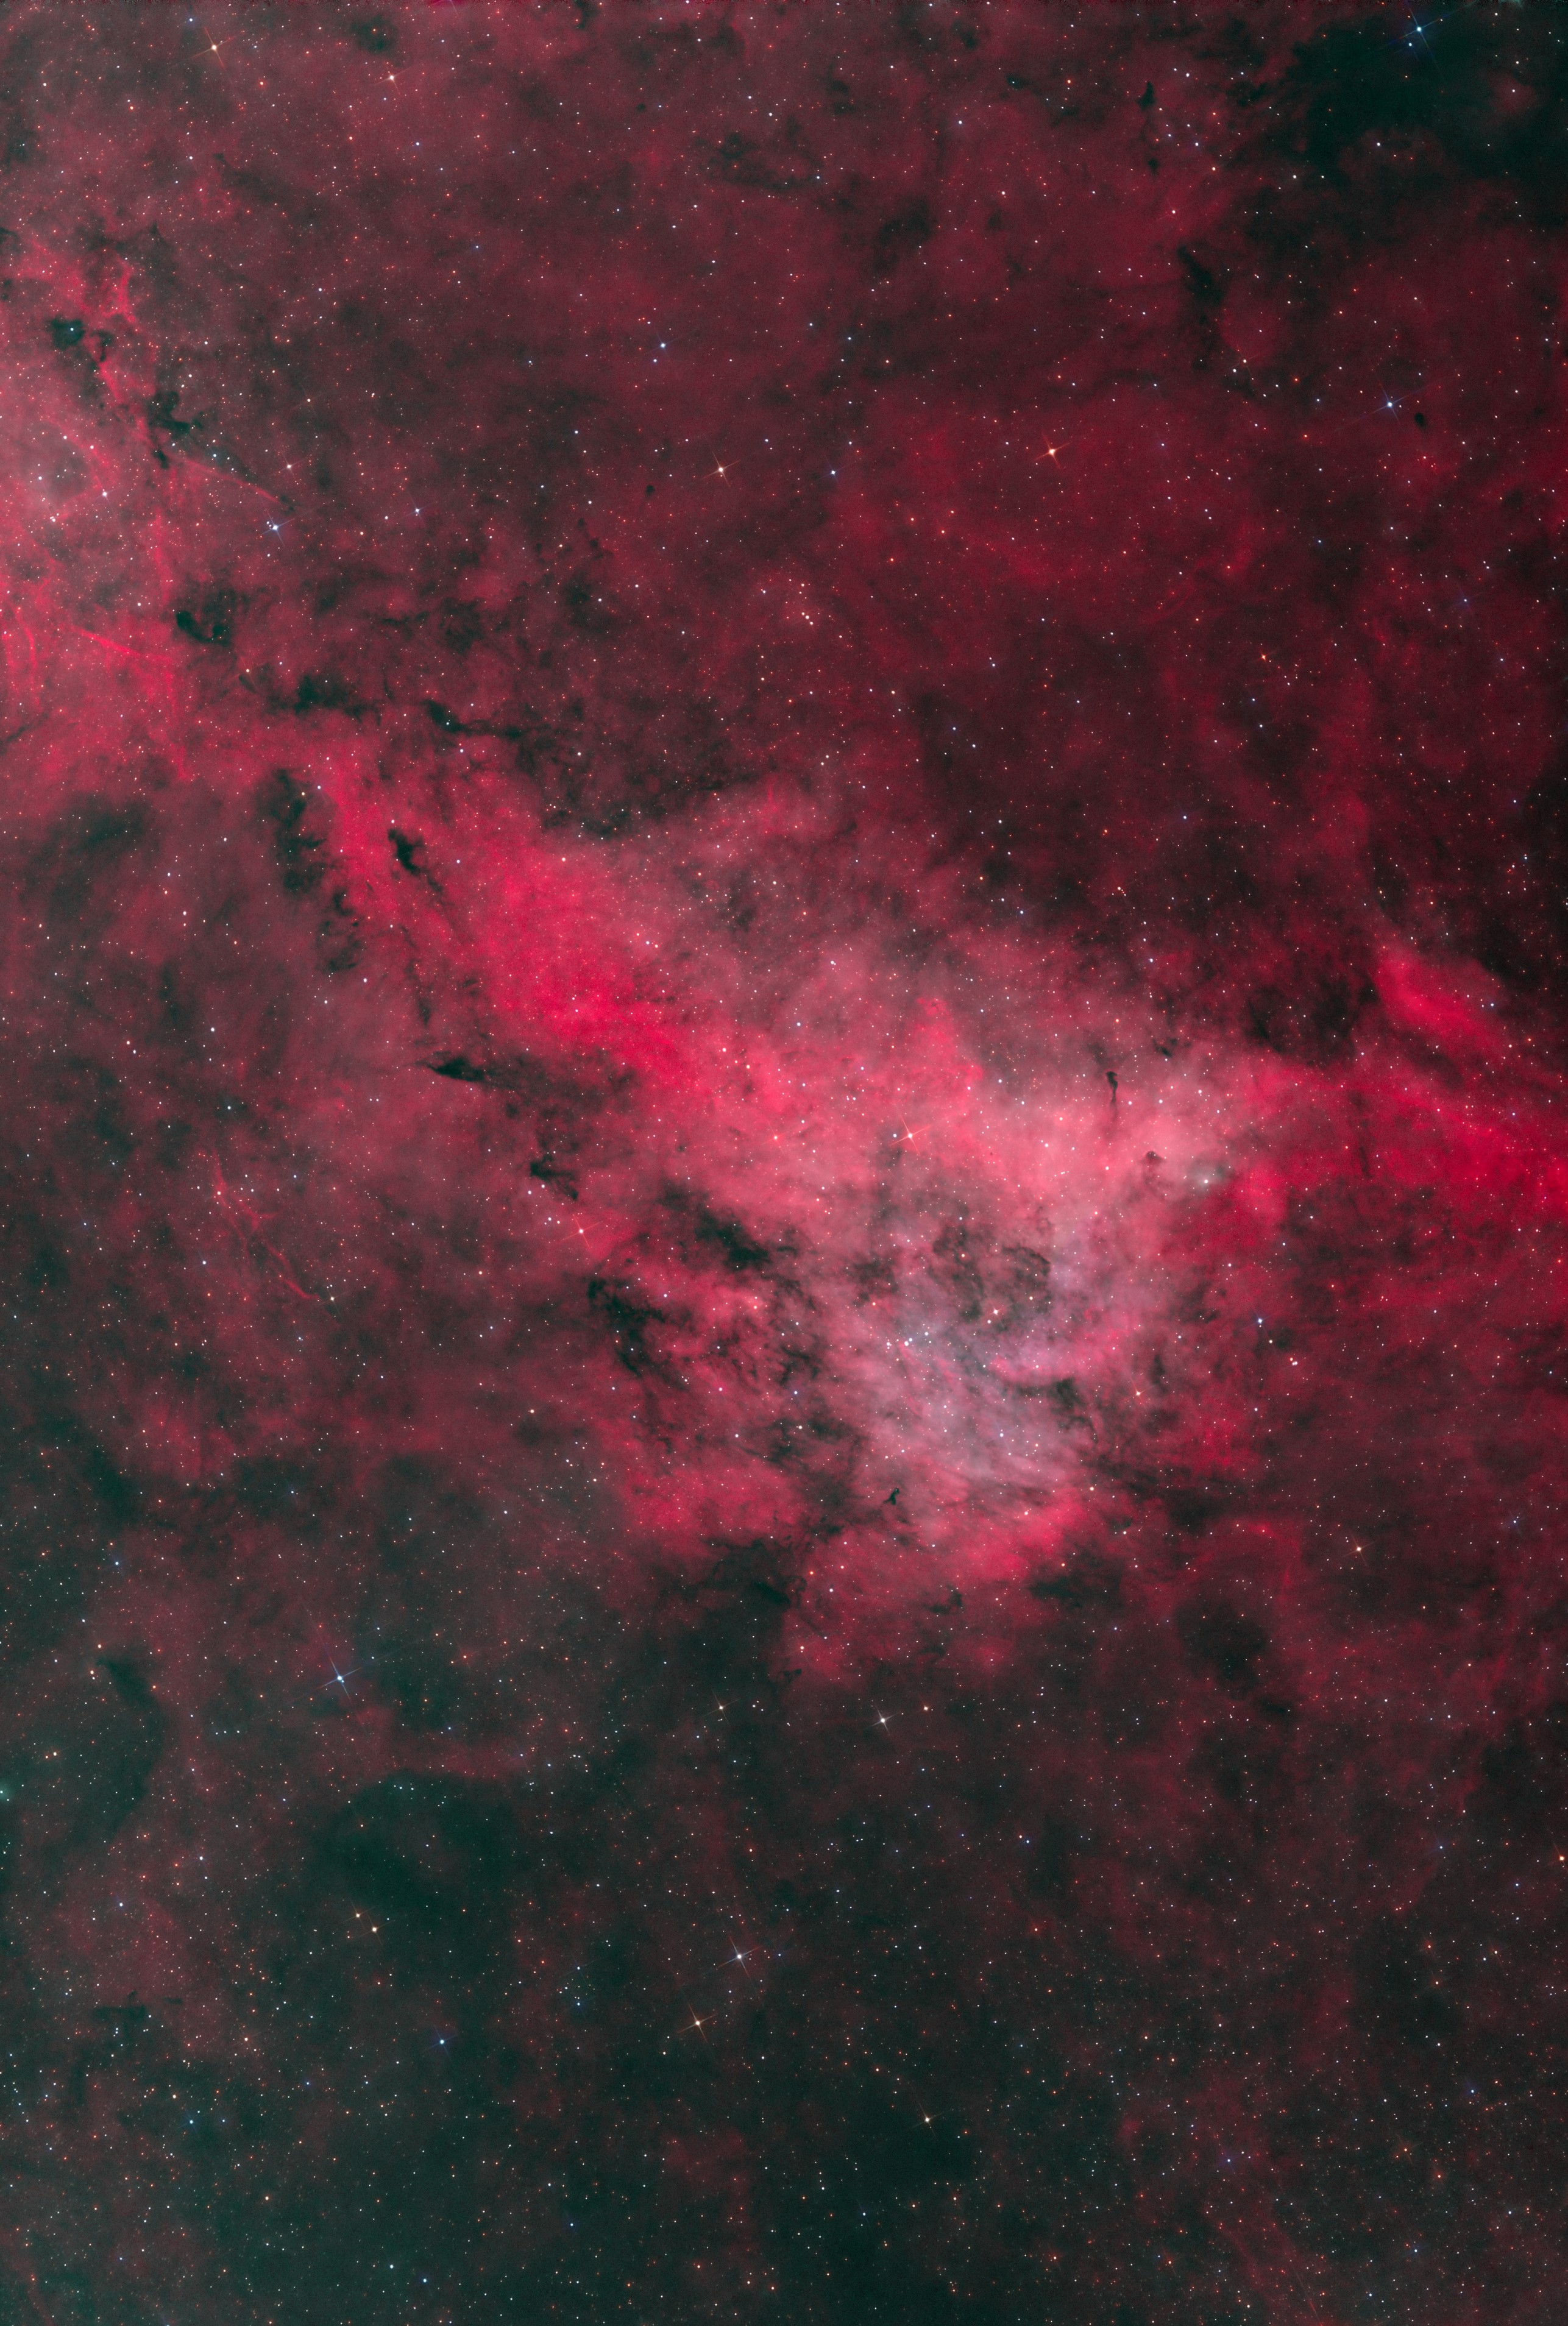 LBN 251_Longhorn nebula_Bicolor_RGB stars_1_sm.jpg